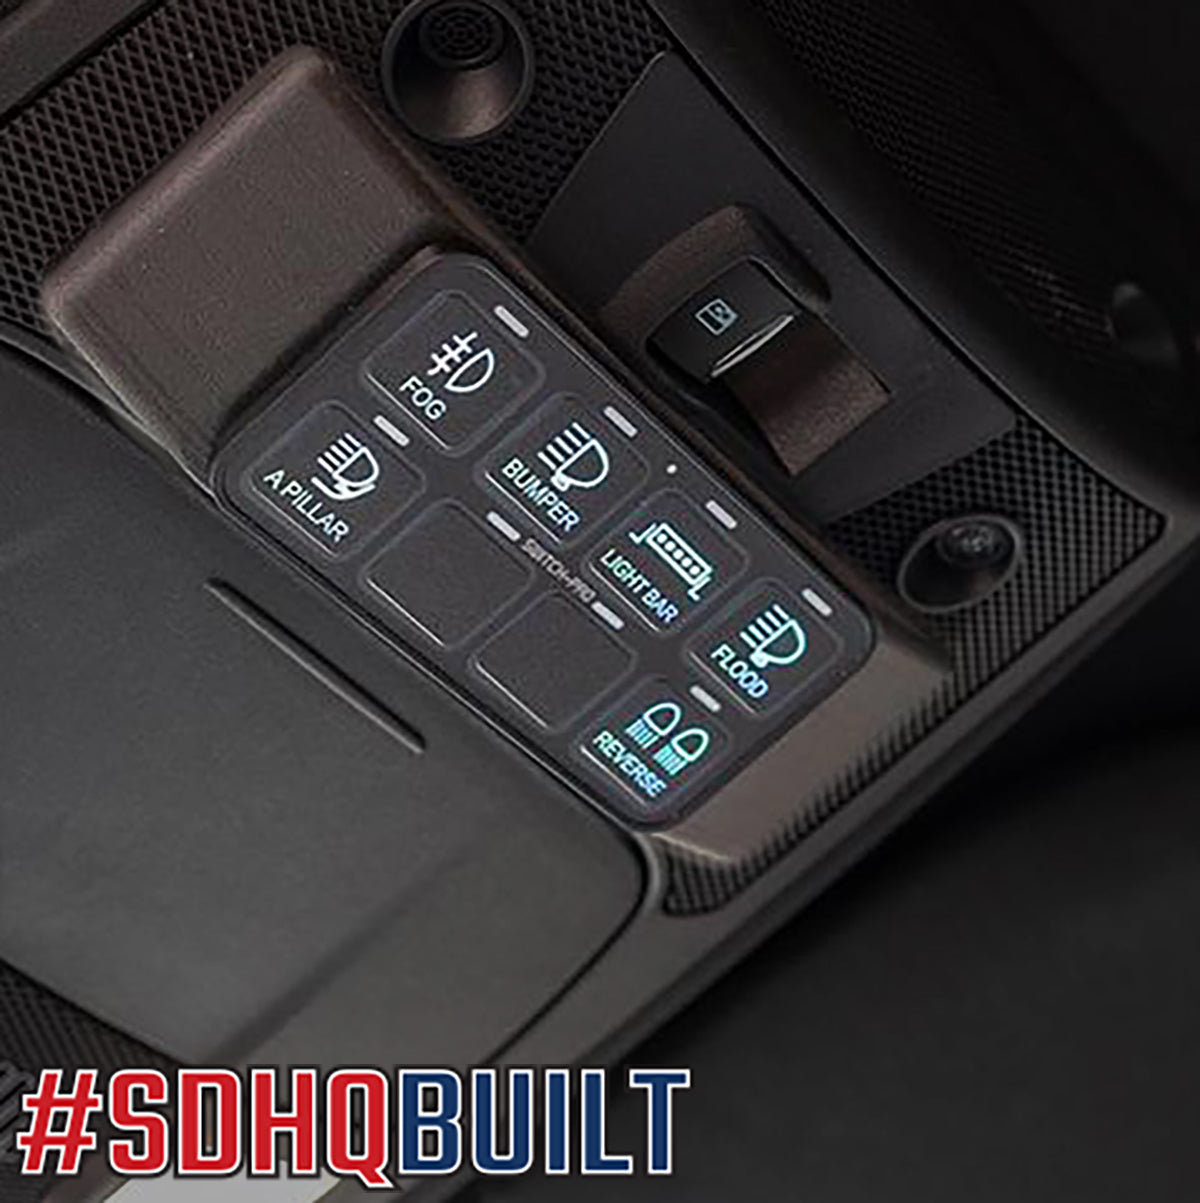 '17-22 Ford F250/350 SDHQ Built Switch-Pros Keypad Mount